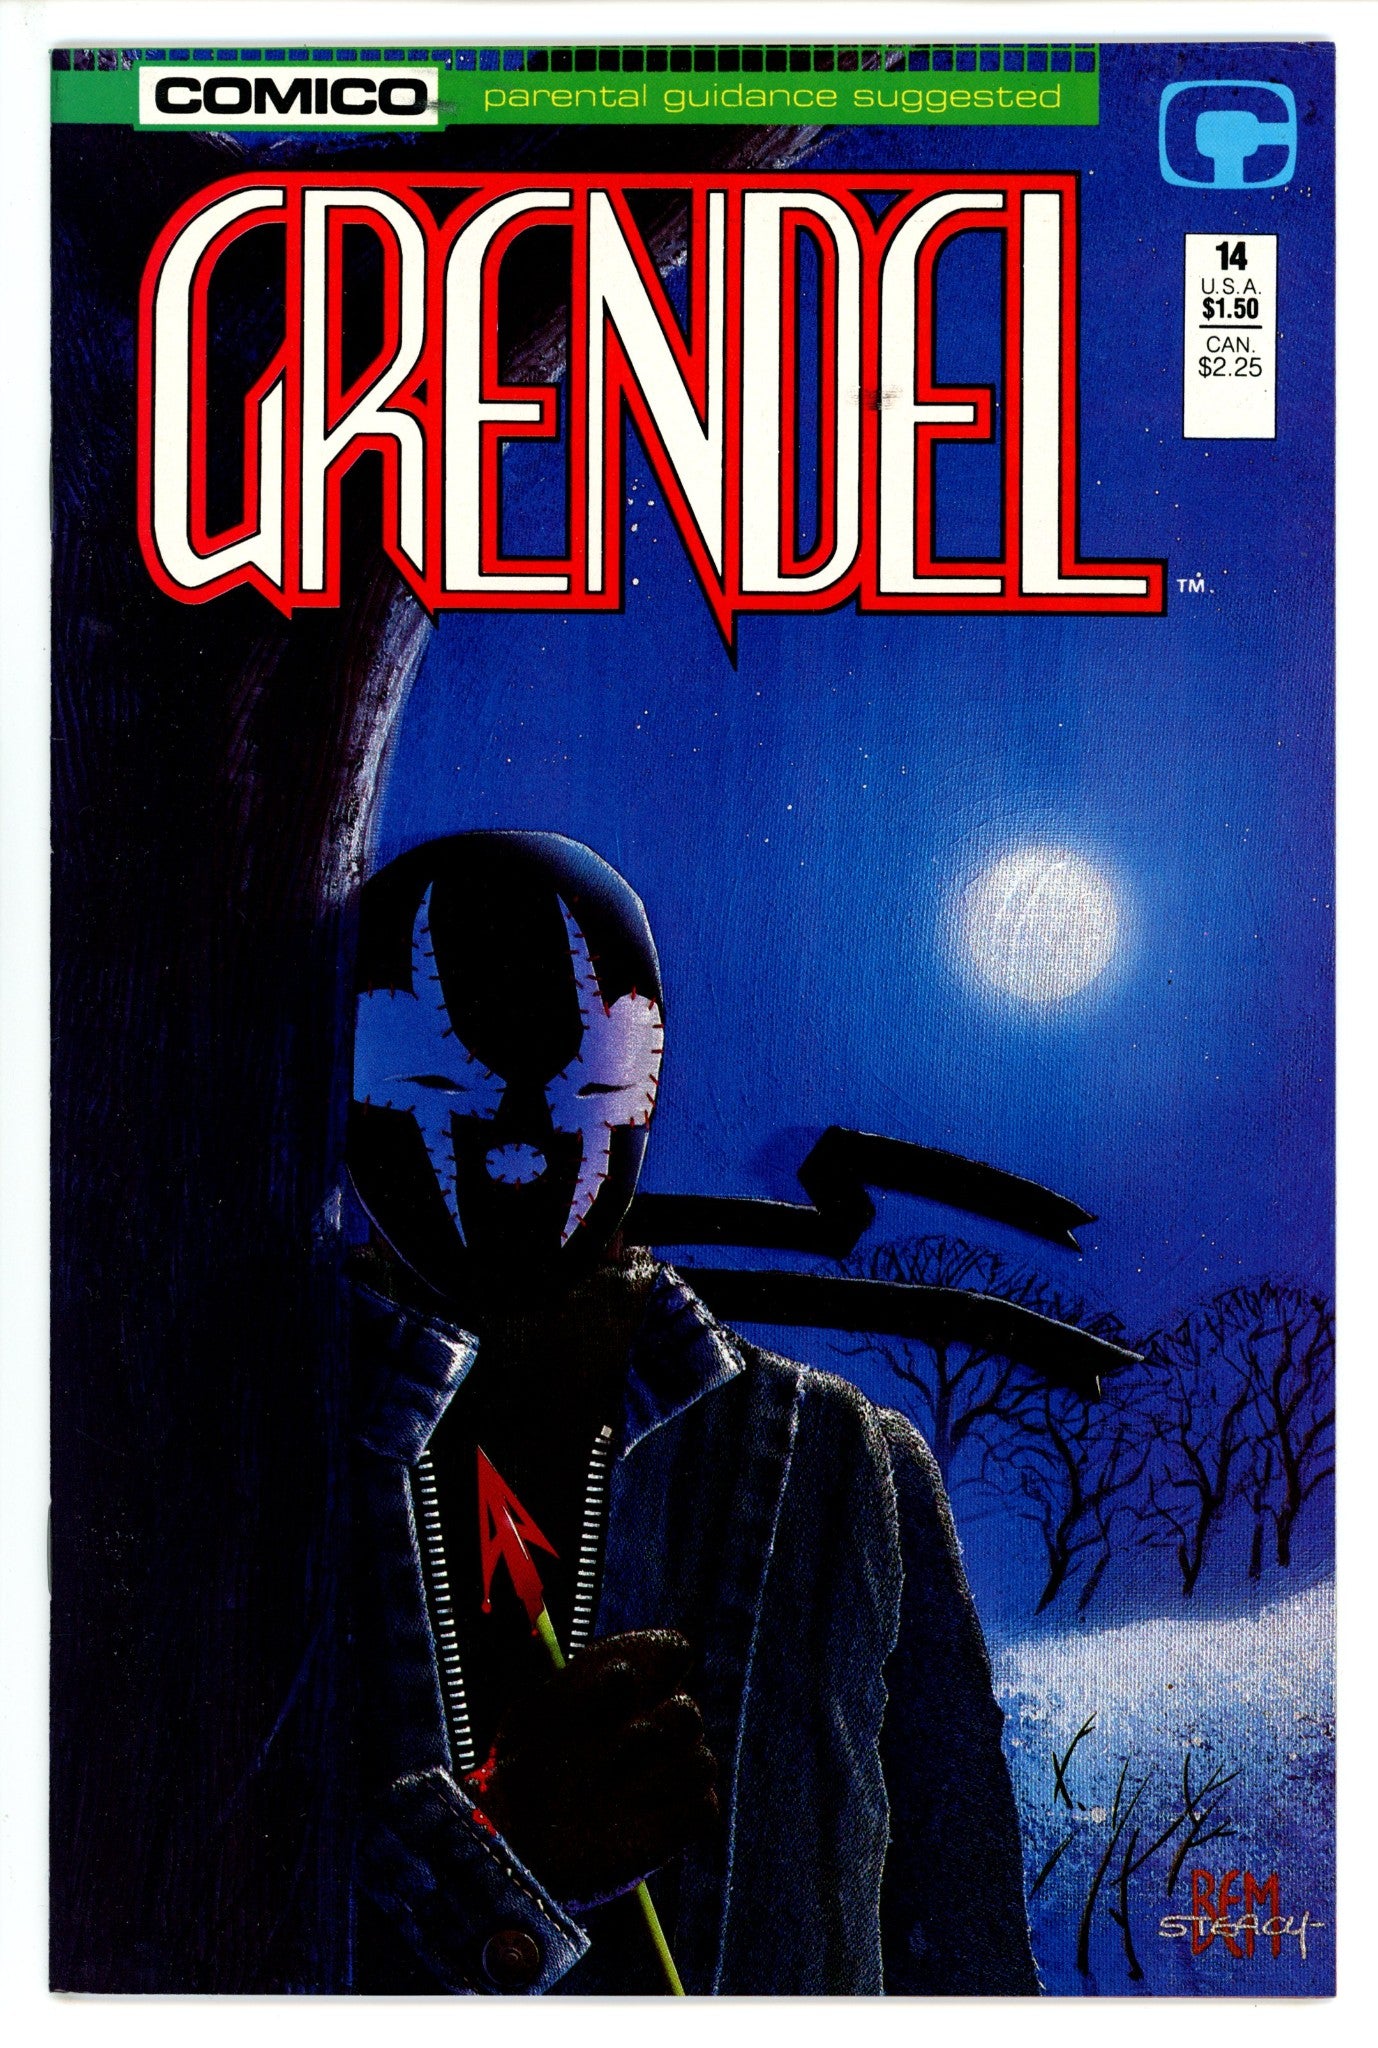 Grendel Vol 2 14 (1987)